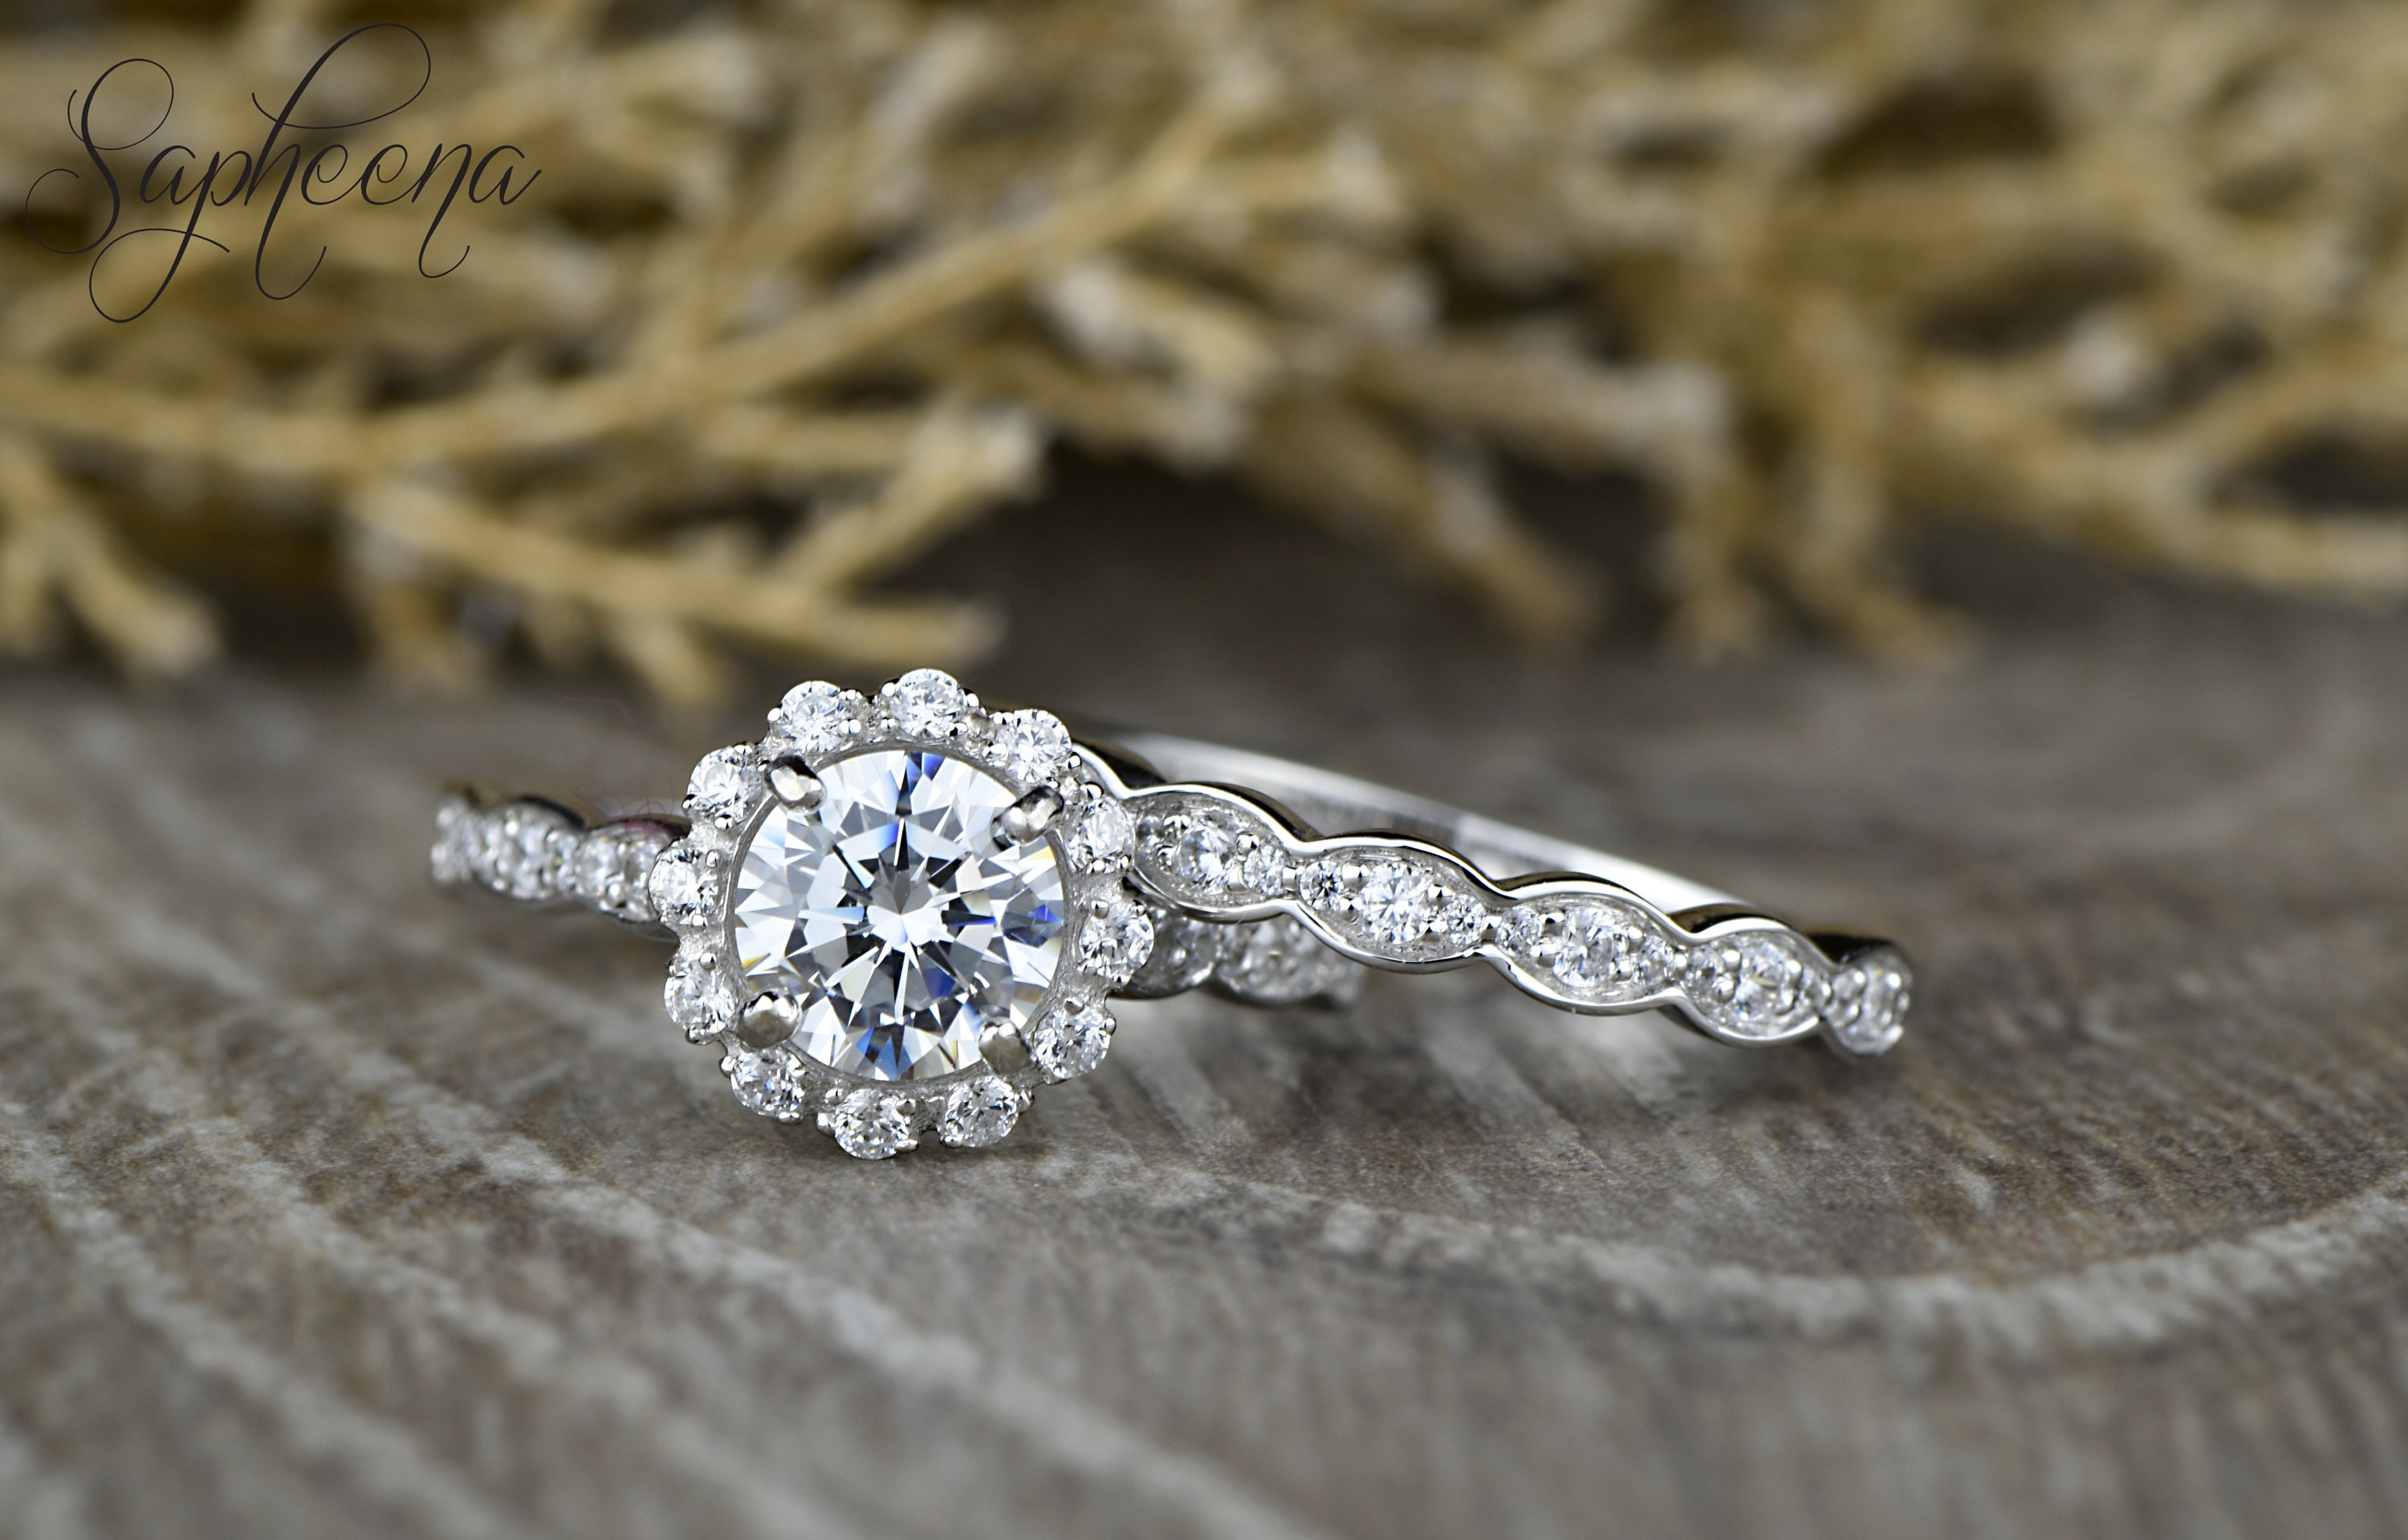 White Sapphire Engagement Ring&Scalloped Wedding Band Bridal | Etsy